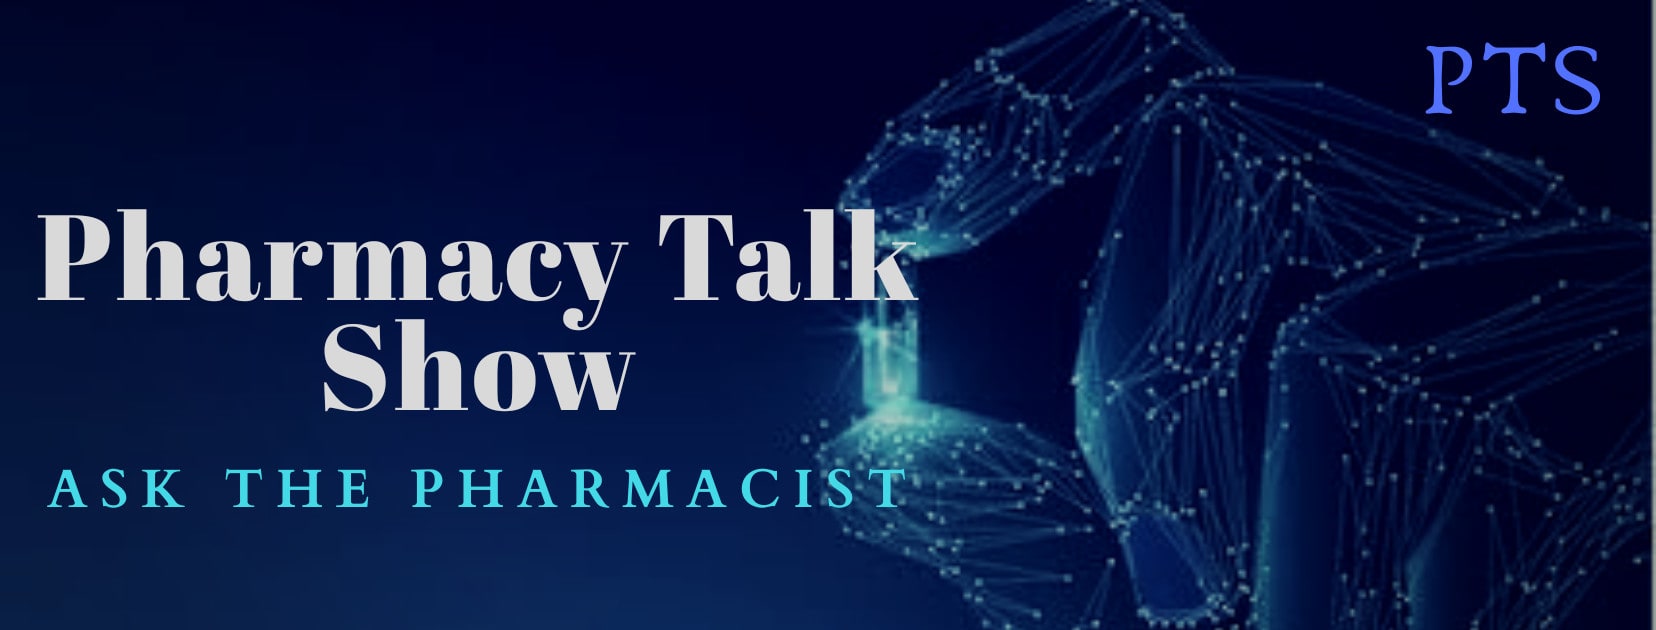 Pharmacy Talk Show